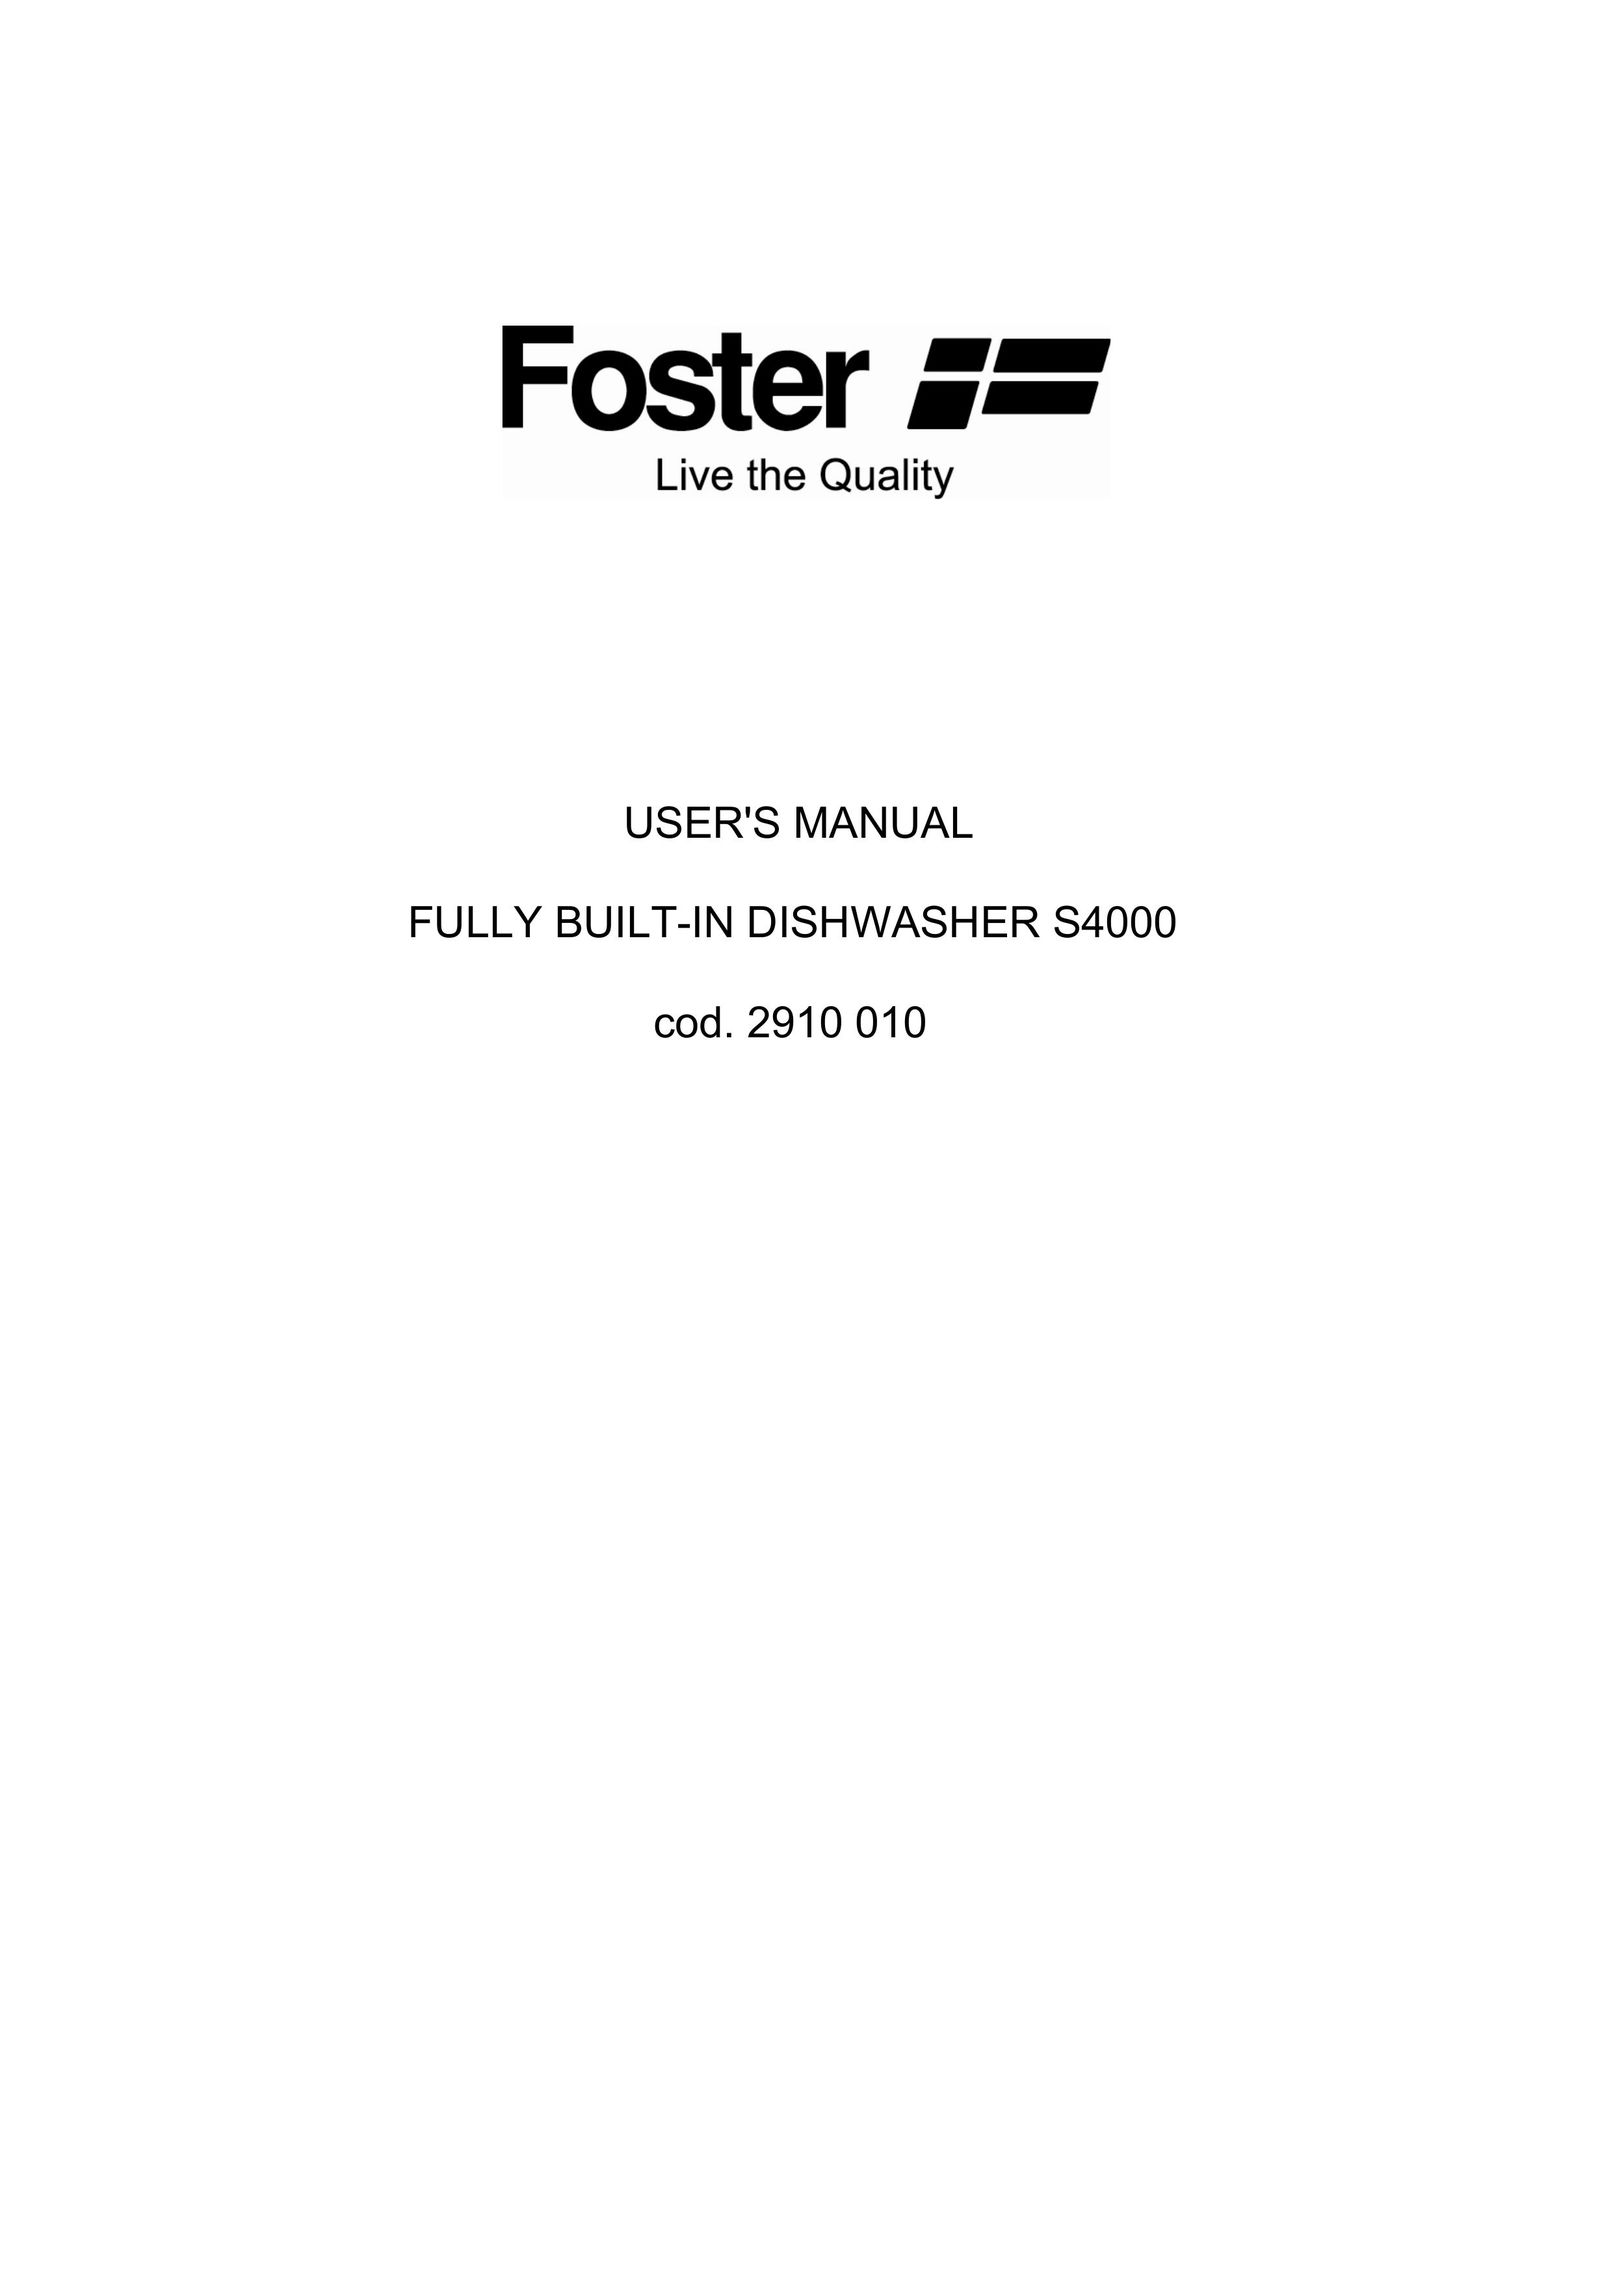 Foster S4000 Dishwasher User Manual